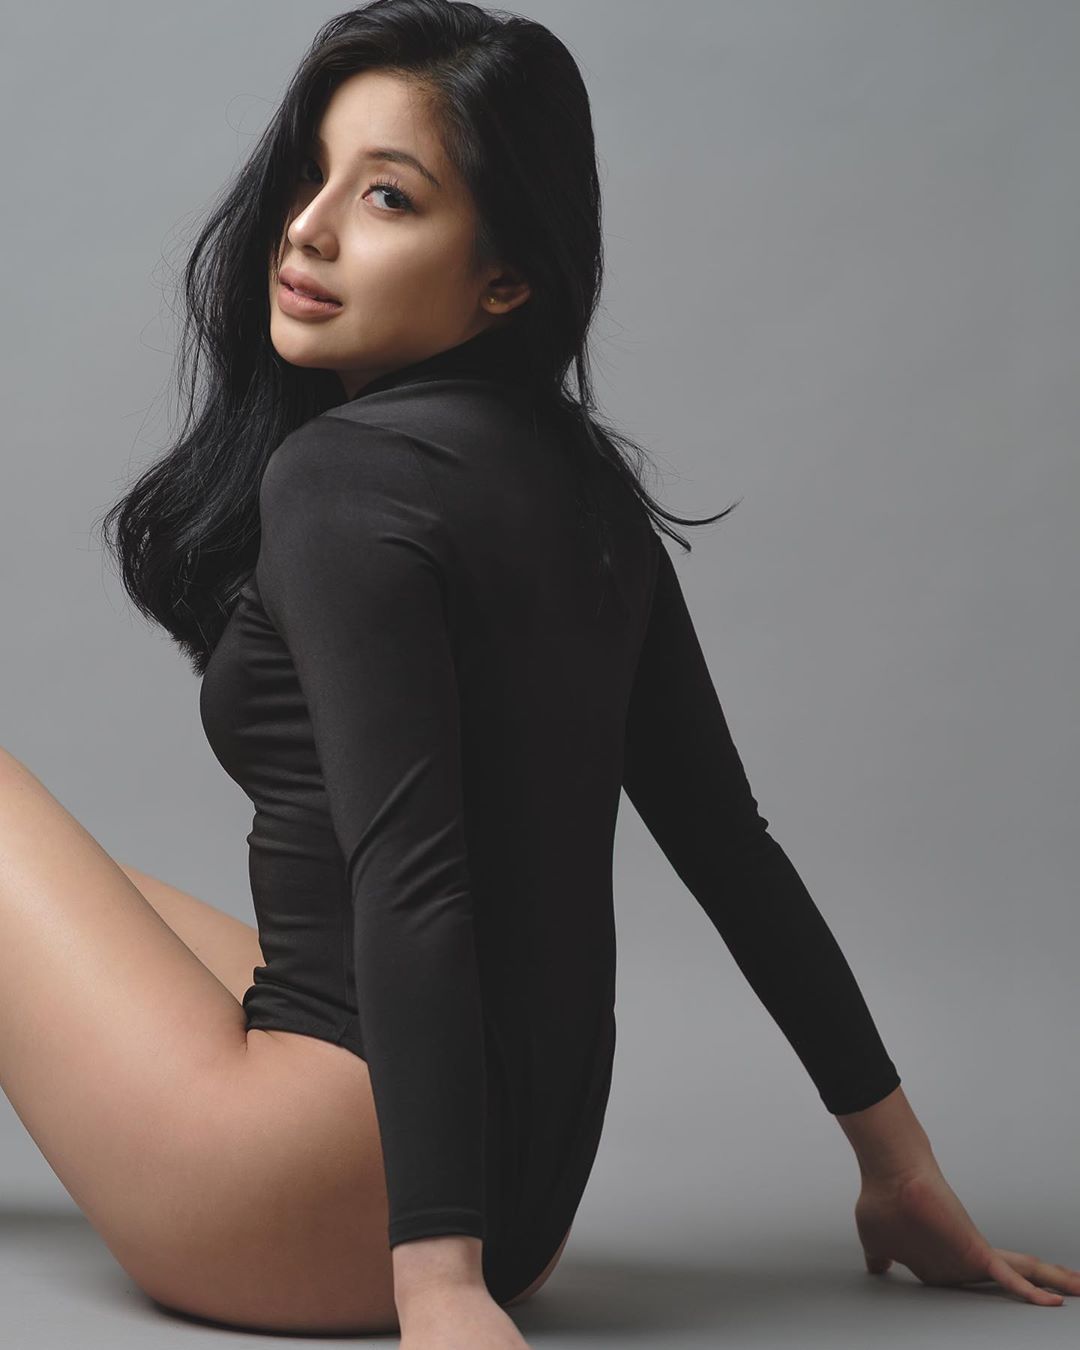 Potret Biancarufinno, Model Cantik Misterius Asal Filipina